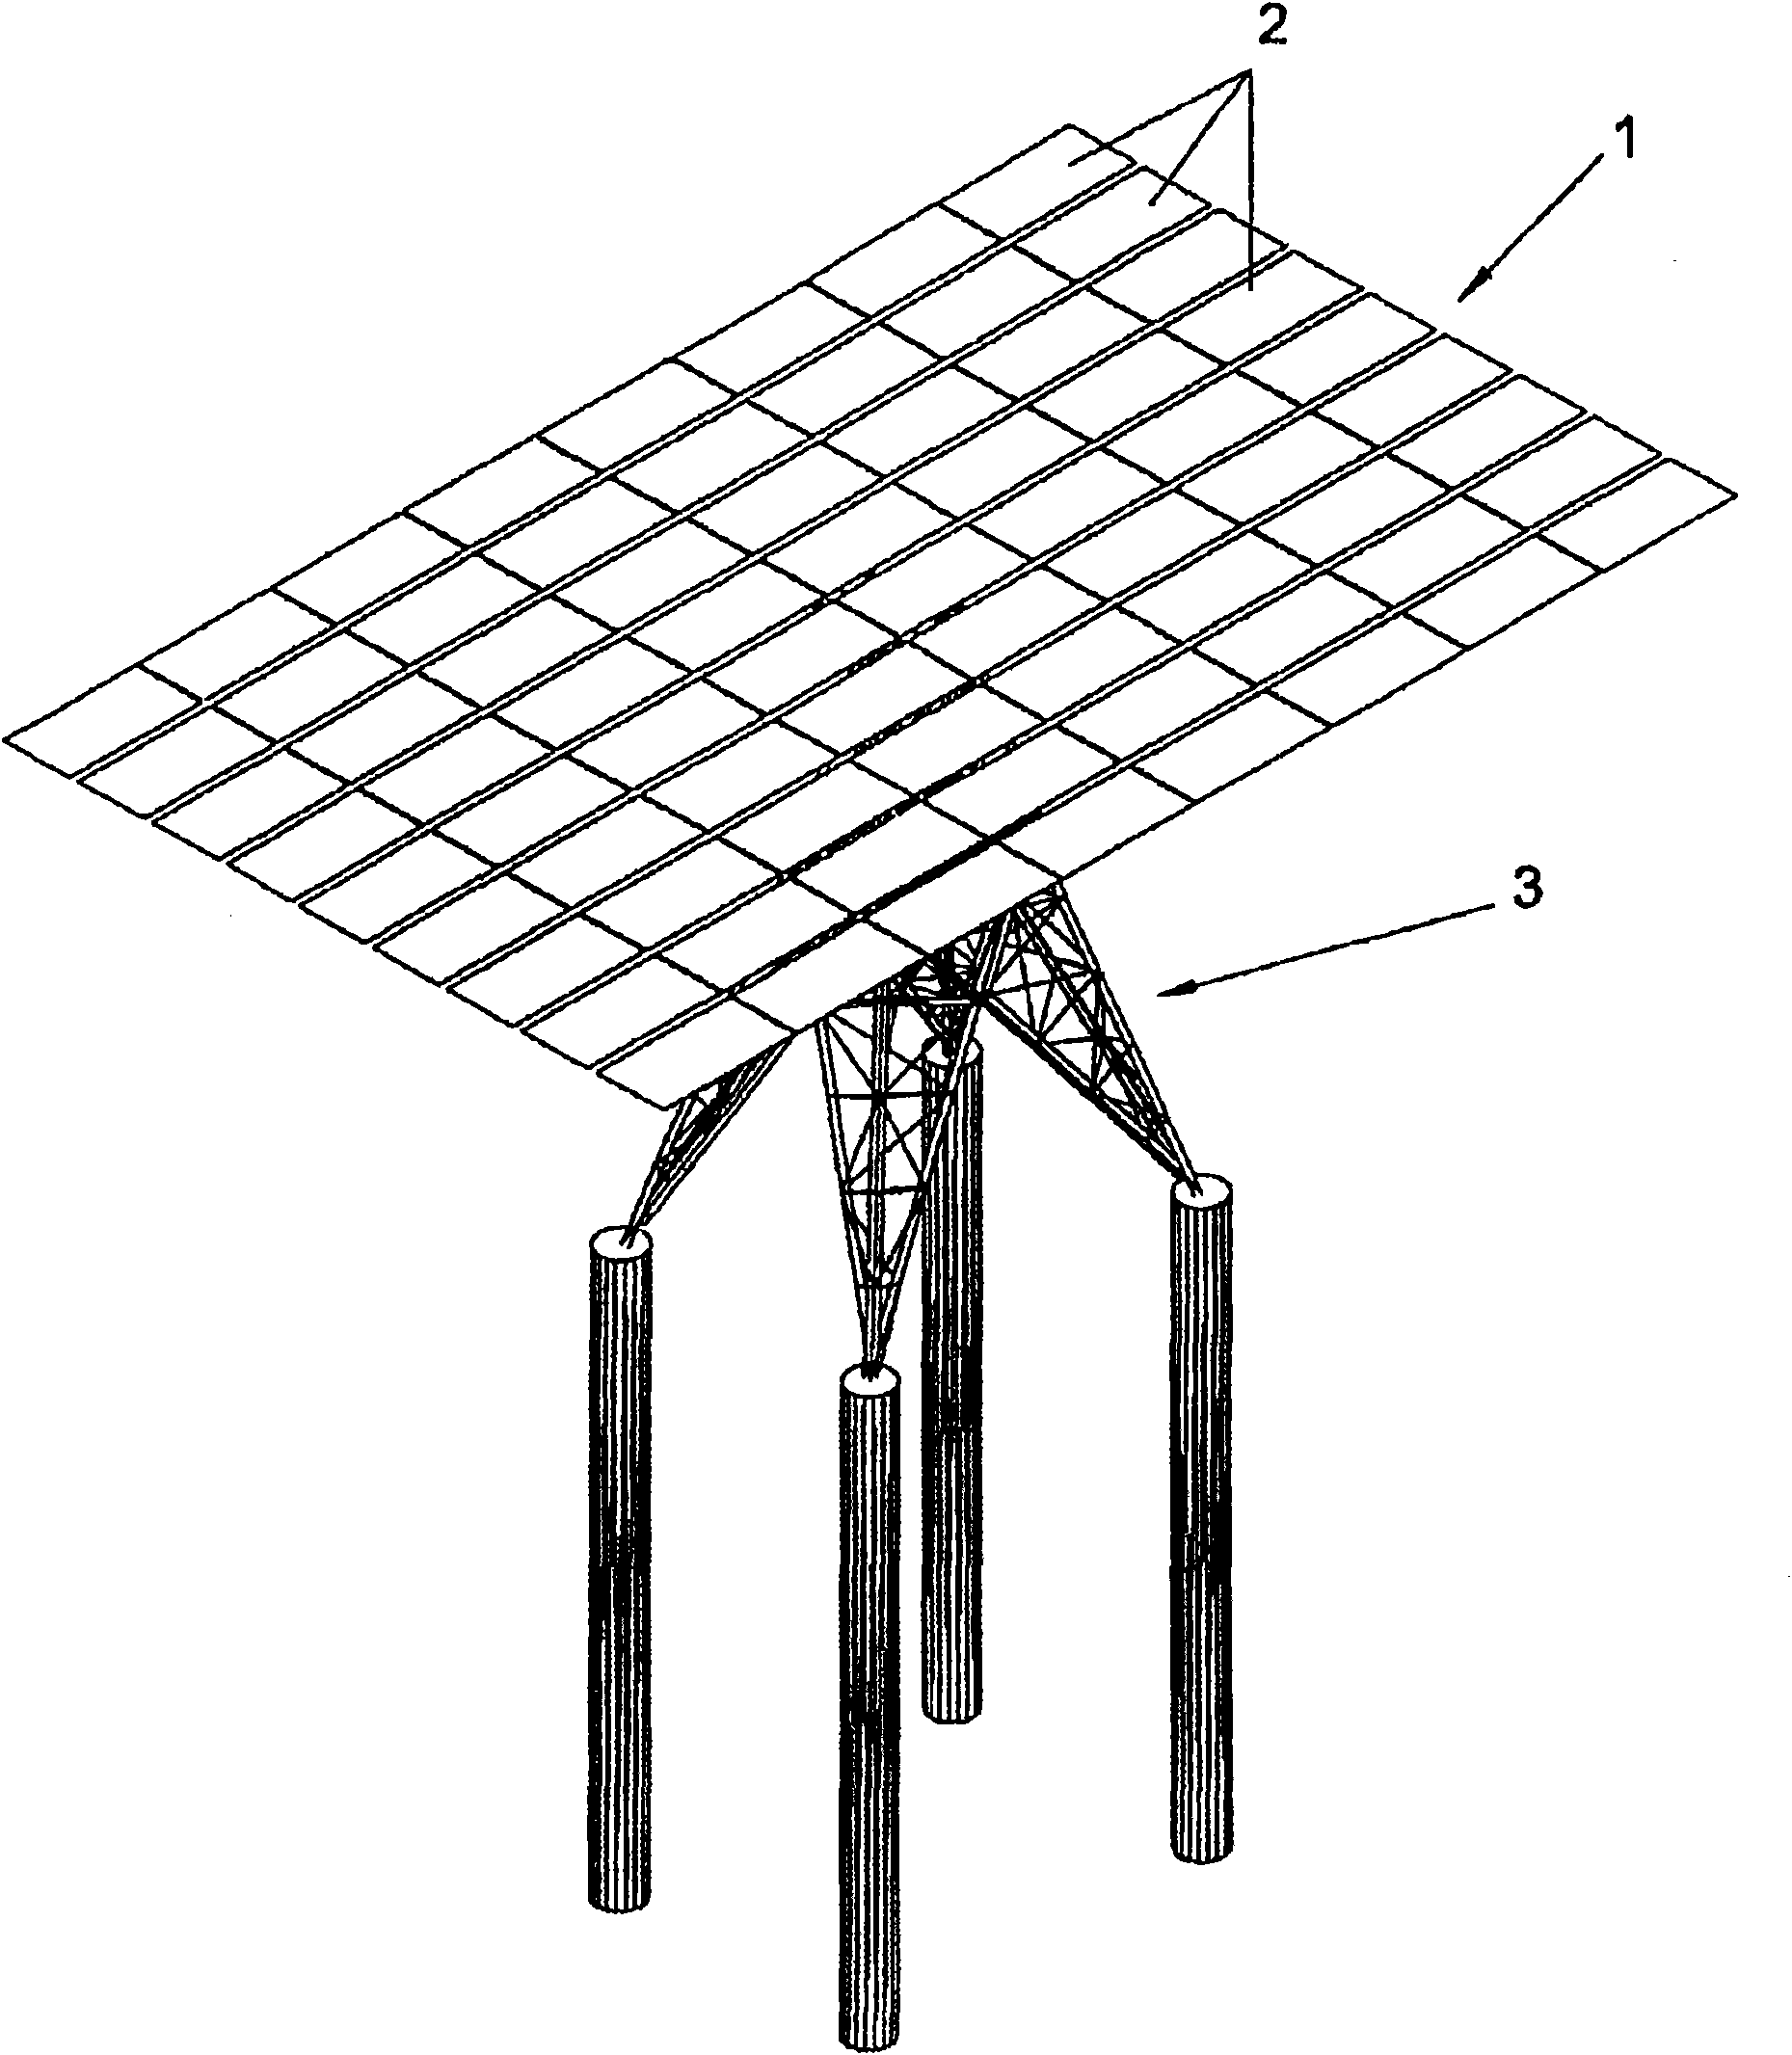 Bidirectional solar tracker